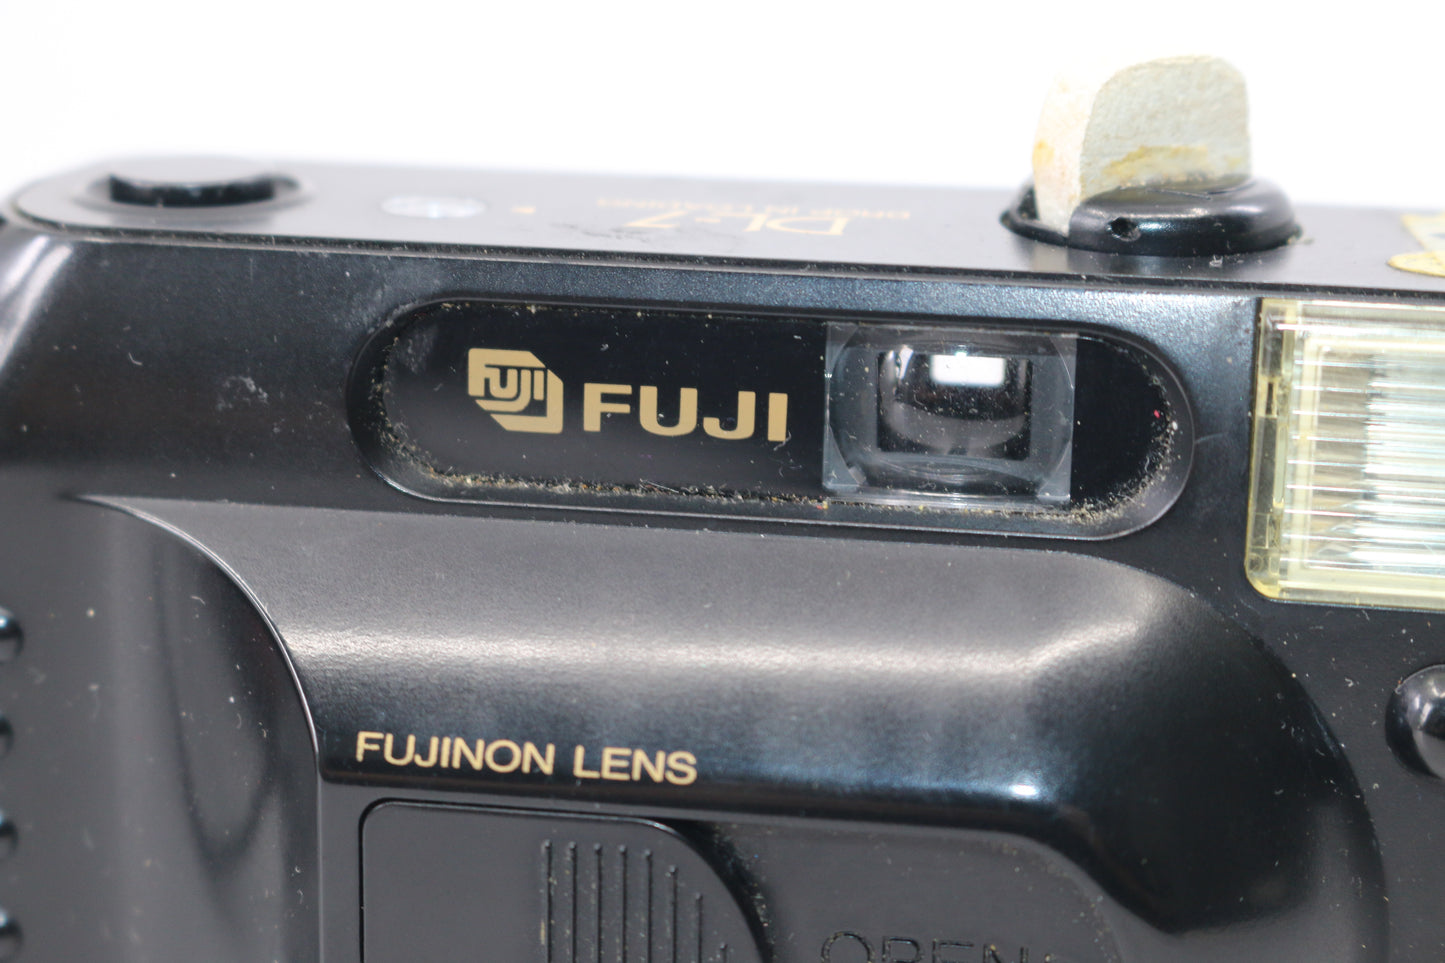 Fuji DL-7 Drop in Loading Black Portable Point & Shoot 35mm Lens Film Camera